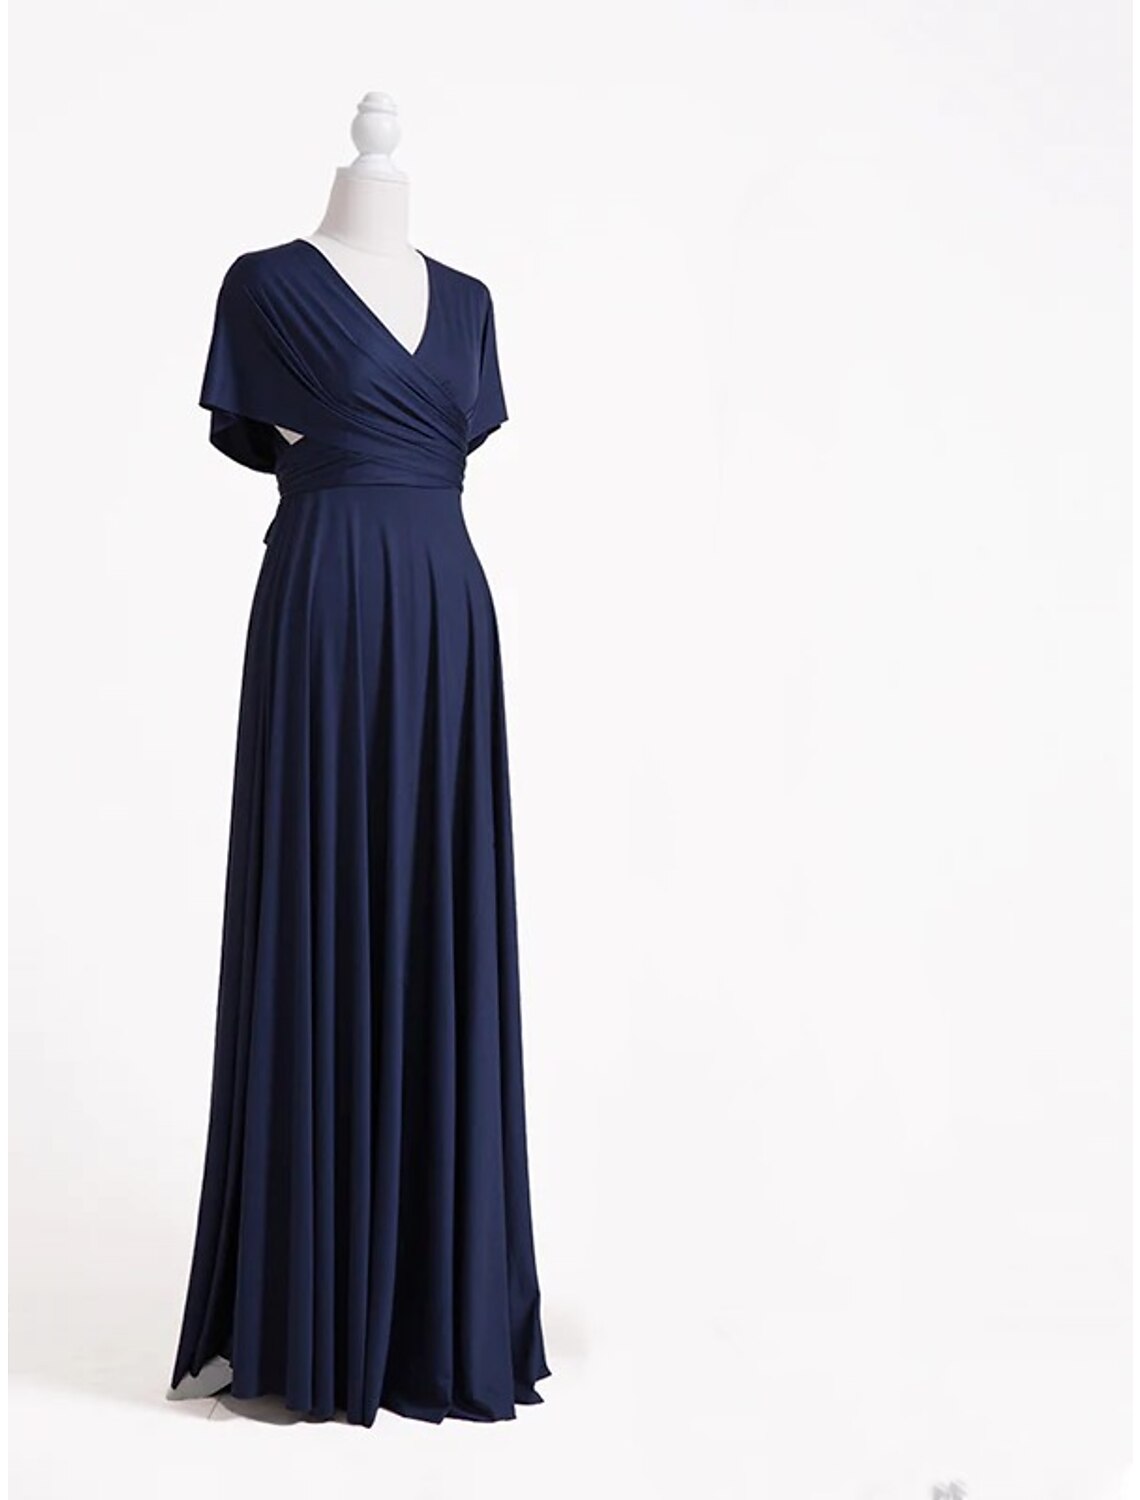 Sheath / Column Bridesmaid Dress V Neck Sleeveless Convertible Floor Length Spandex with Pleats / Solid Color